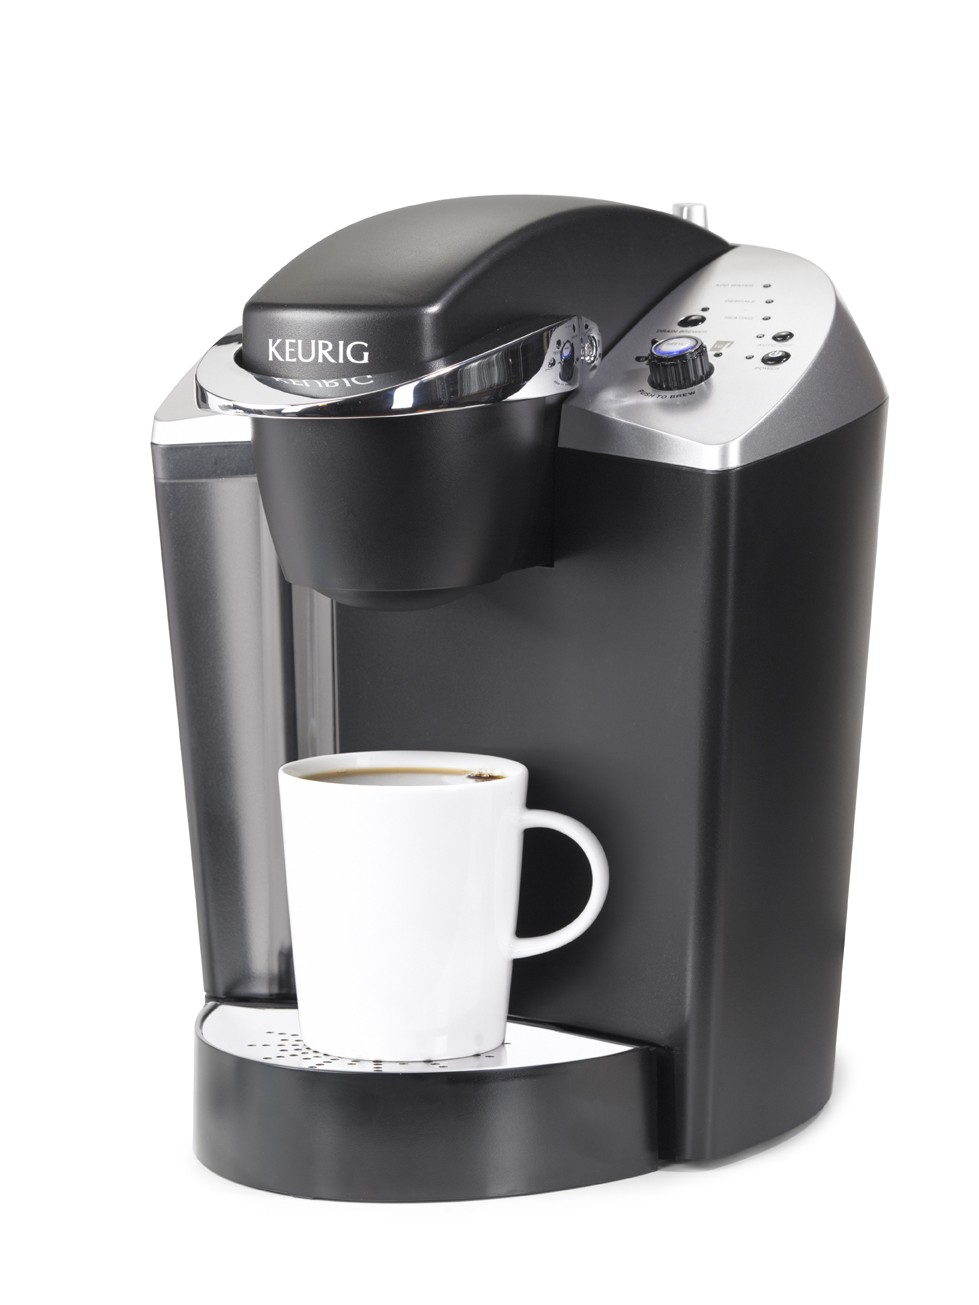 https://www.drinkmorewater.com/wp-content/uploads/2013/05/Keurig-B140-One-Cup-Coffee-Maker1.jpg